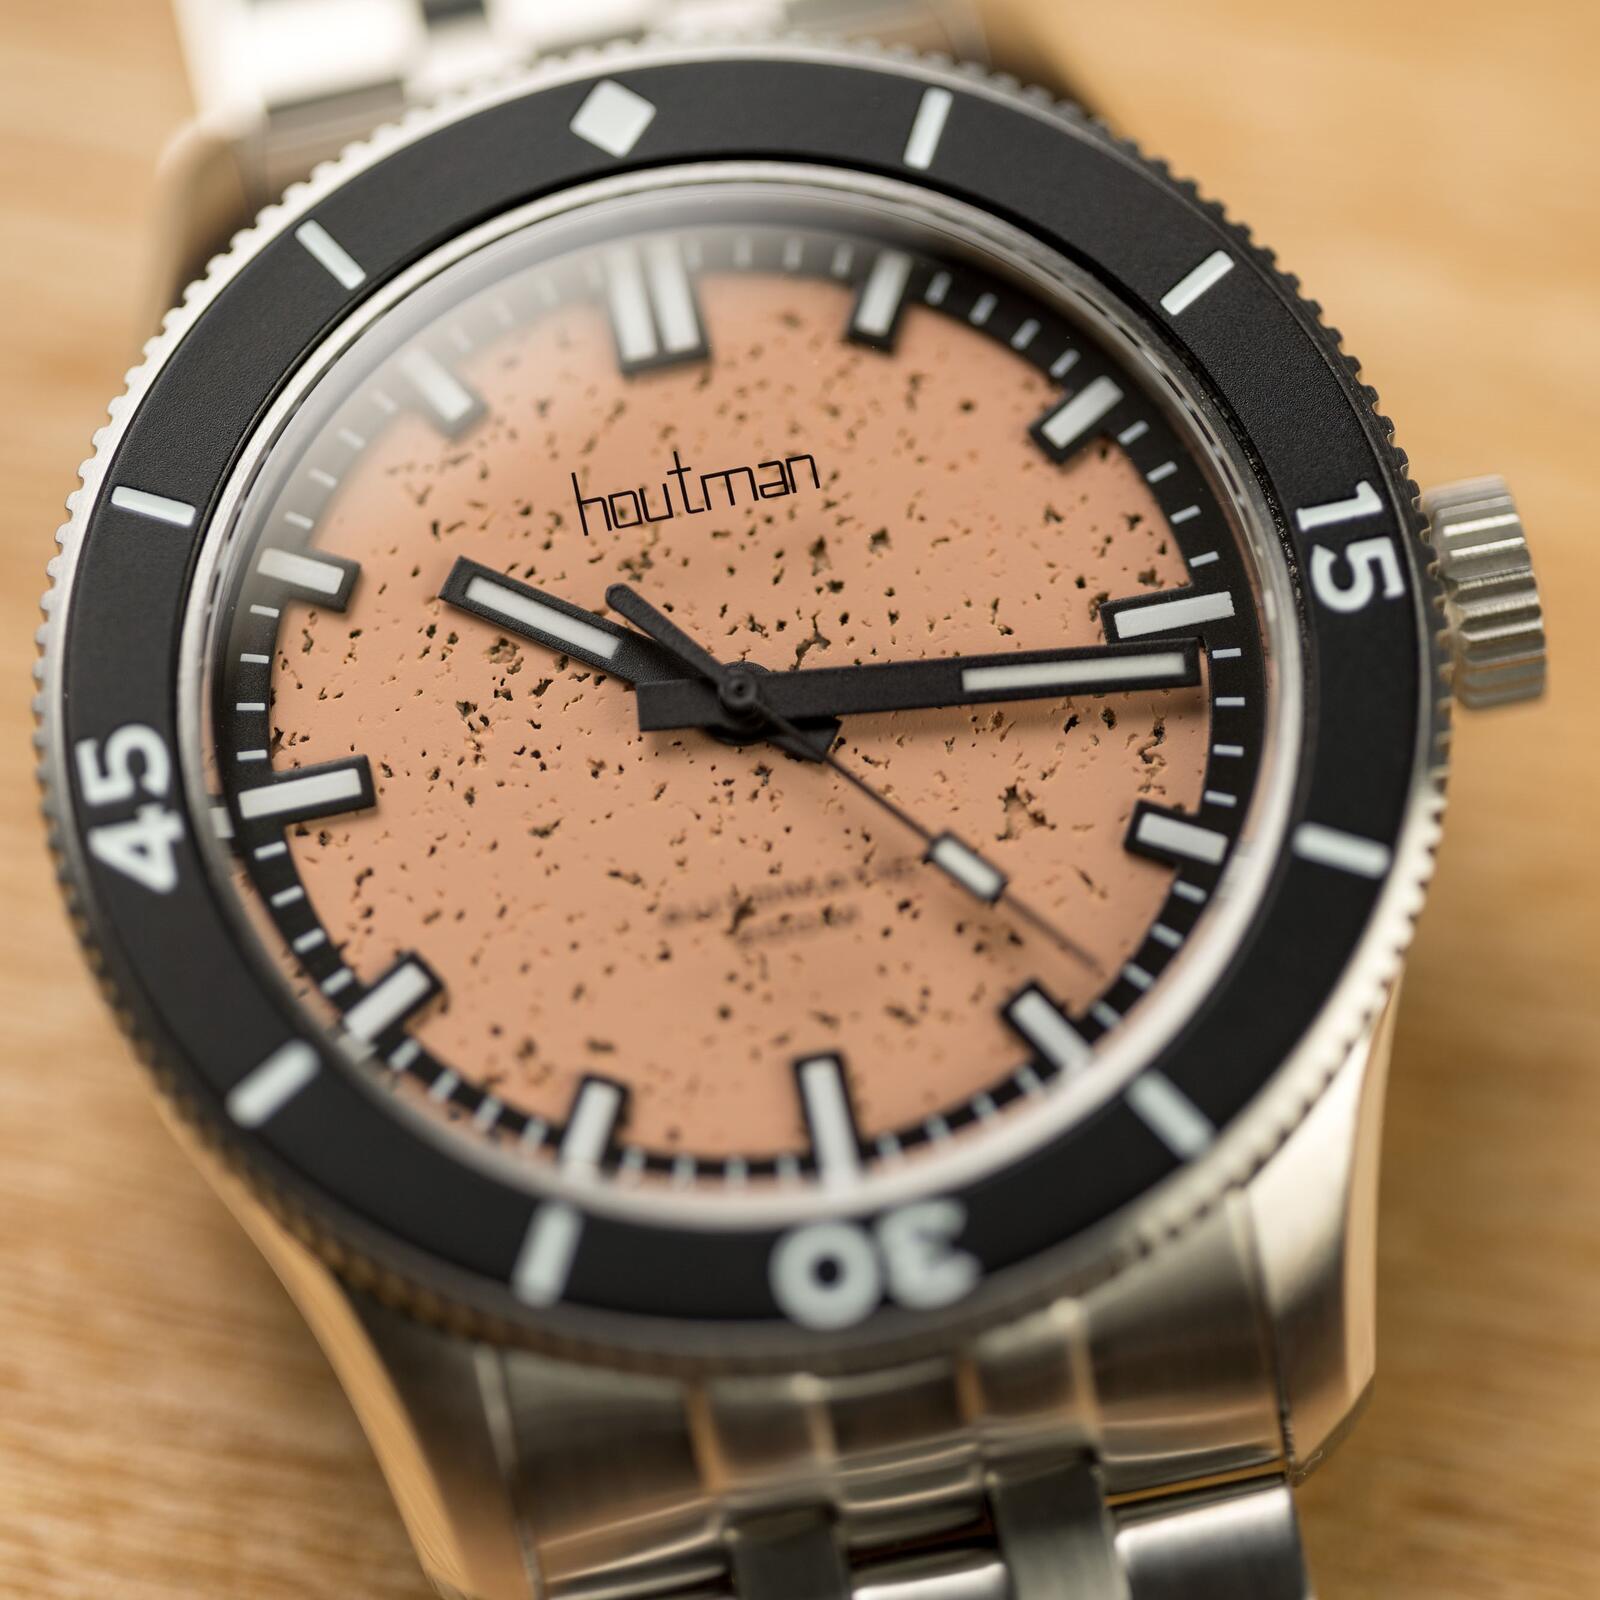 In-Depth - The Ulysse Nardin Freak, 20 years of Watchmaking Innovation